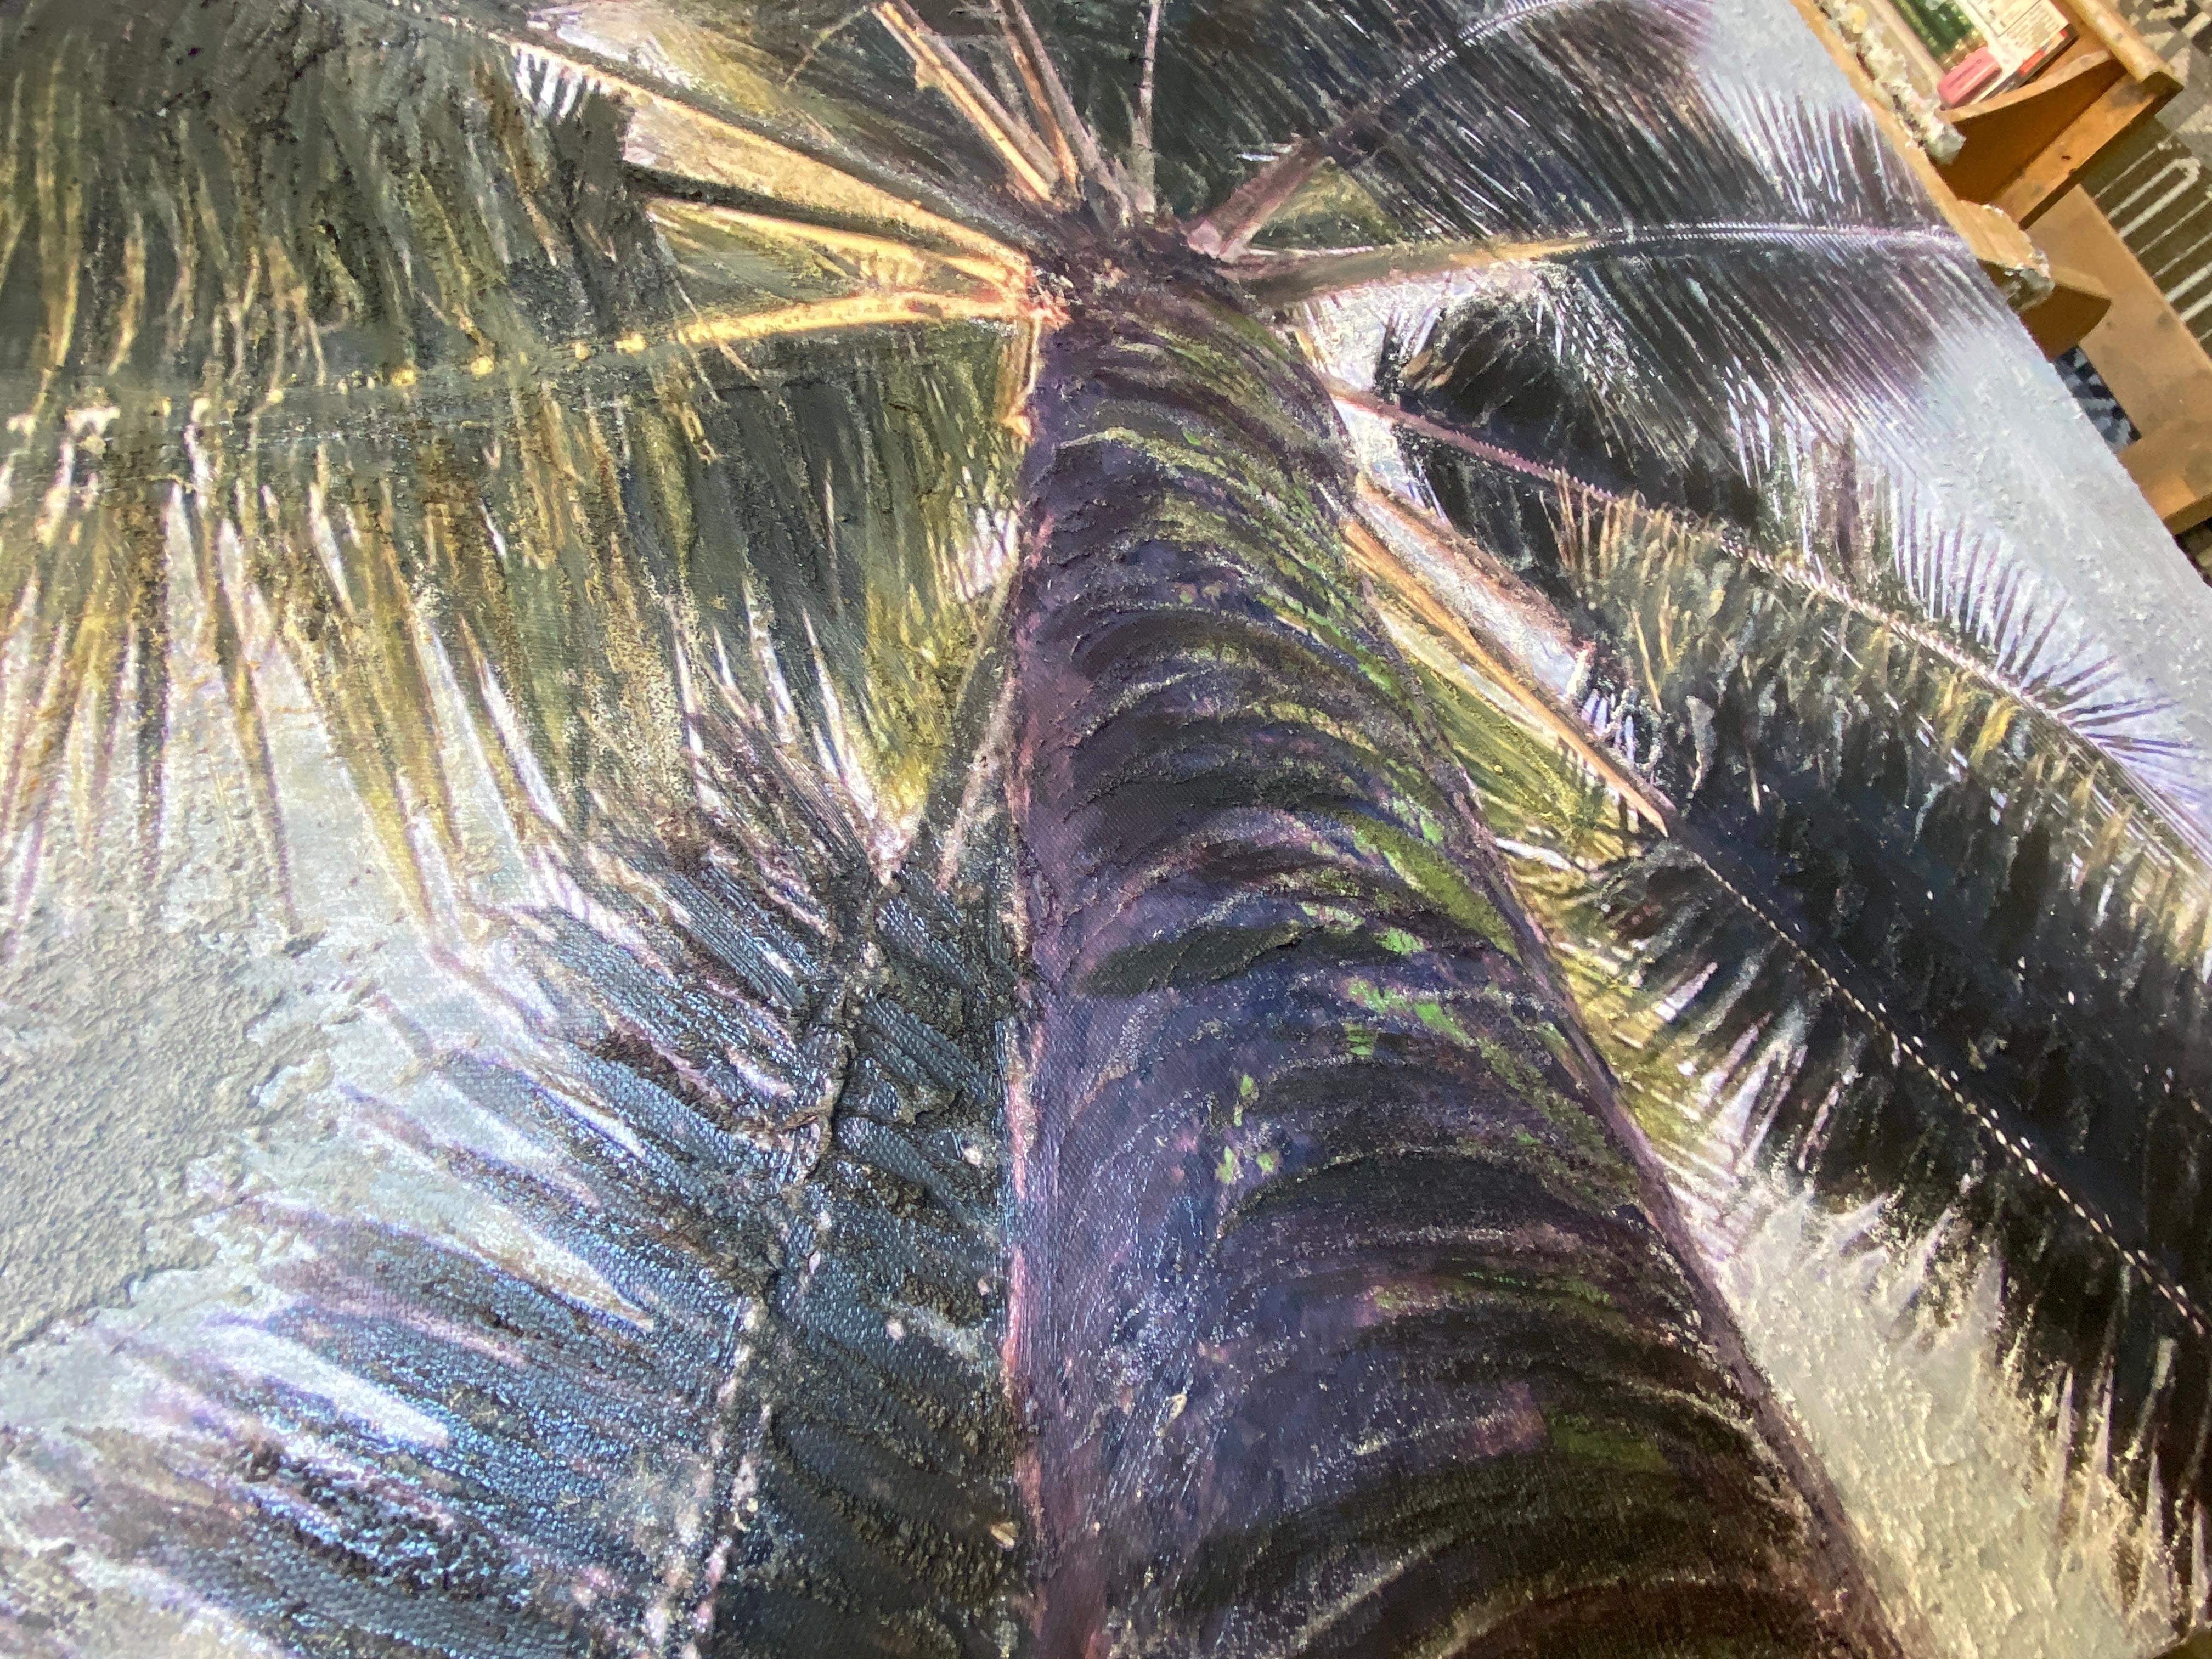 Coastal Palms Mixed Media Painting on Canvas 60h x 40